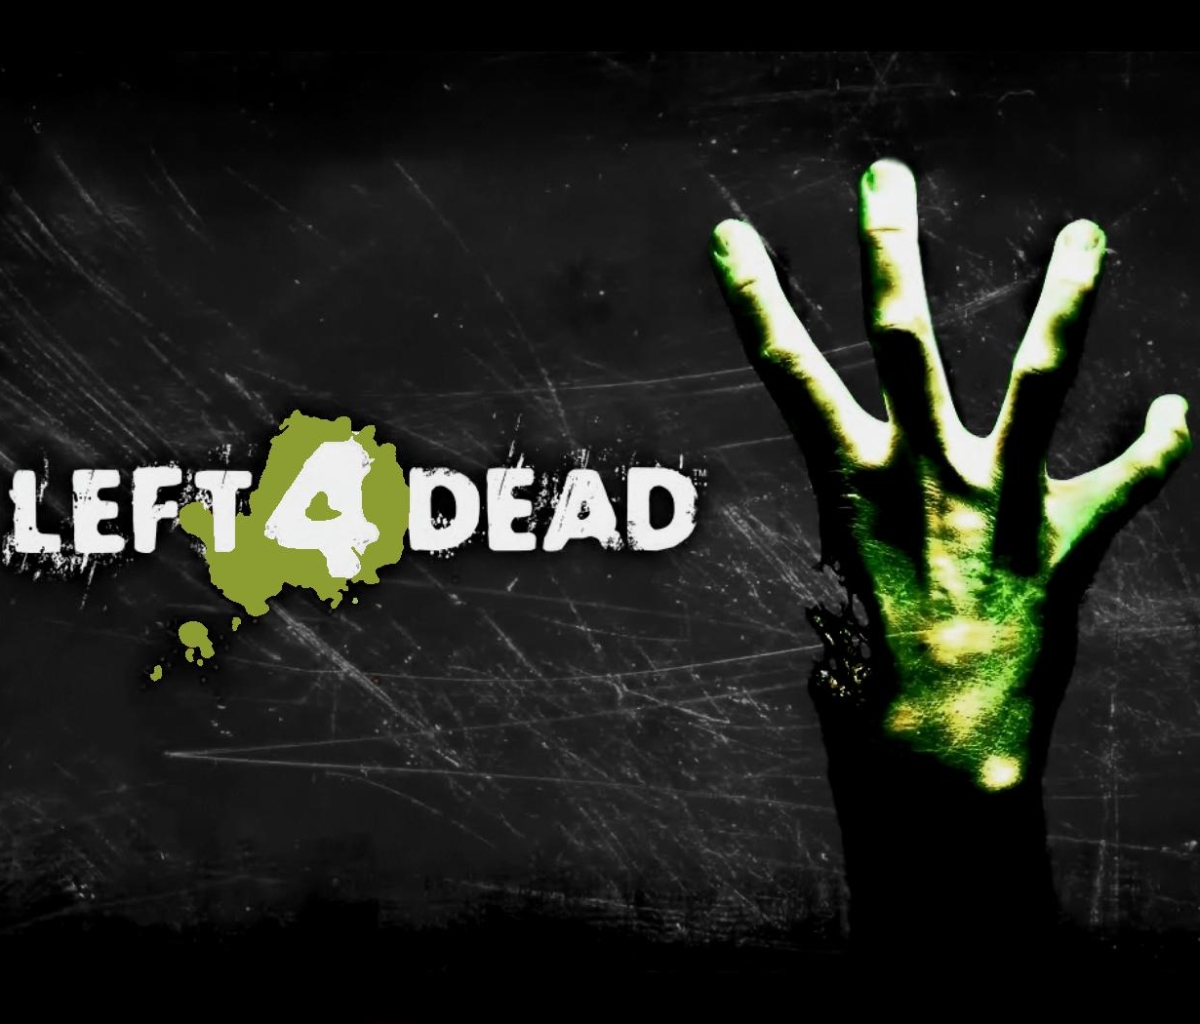 Baixar papel de parede para celular de Videogame, Deixou 4 Mortos, Left 4 Dead gratuito.